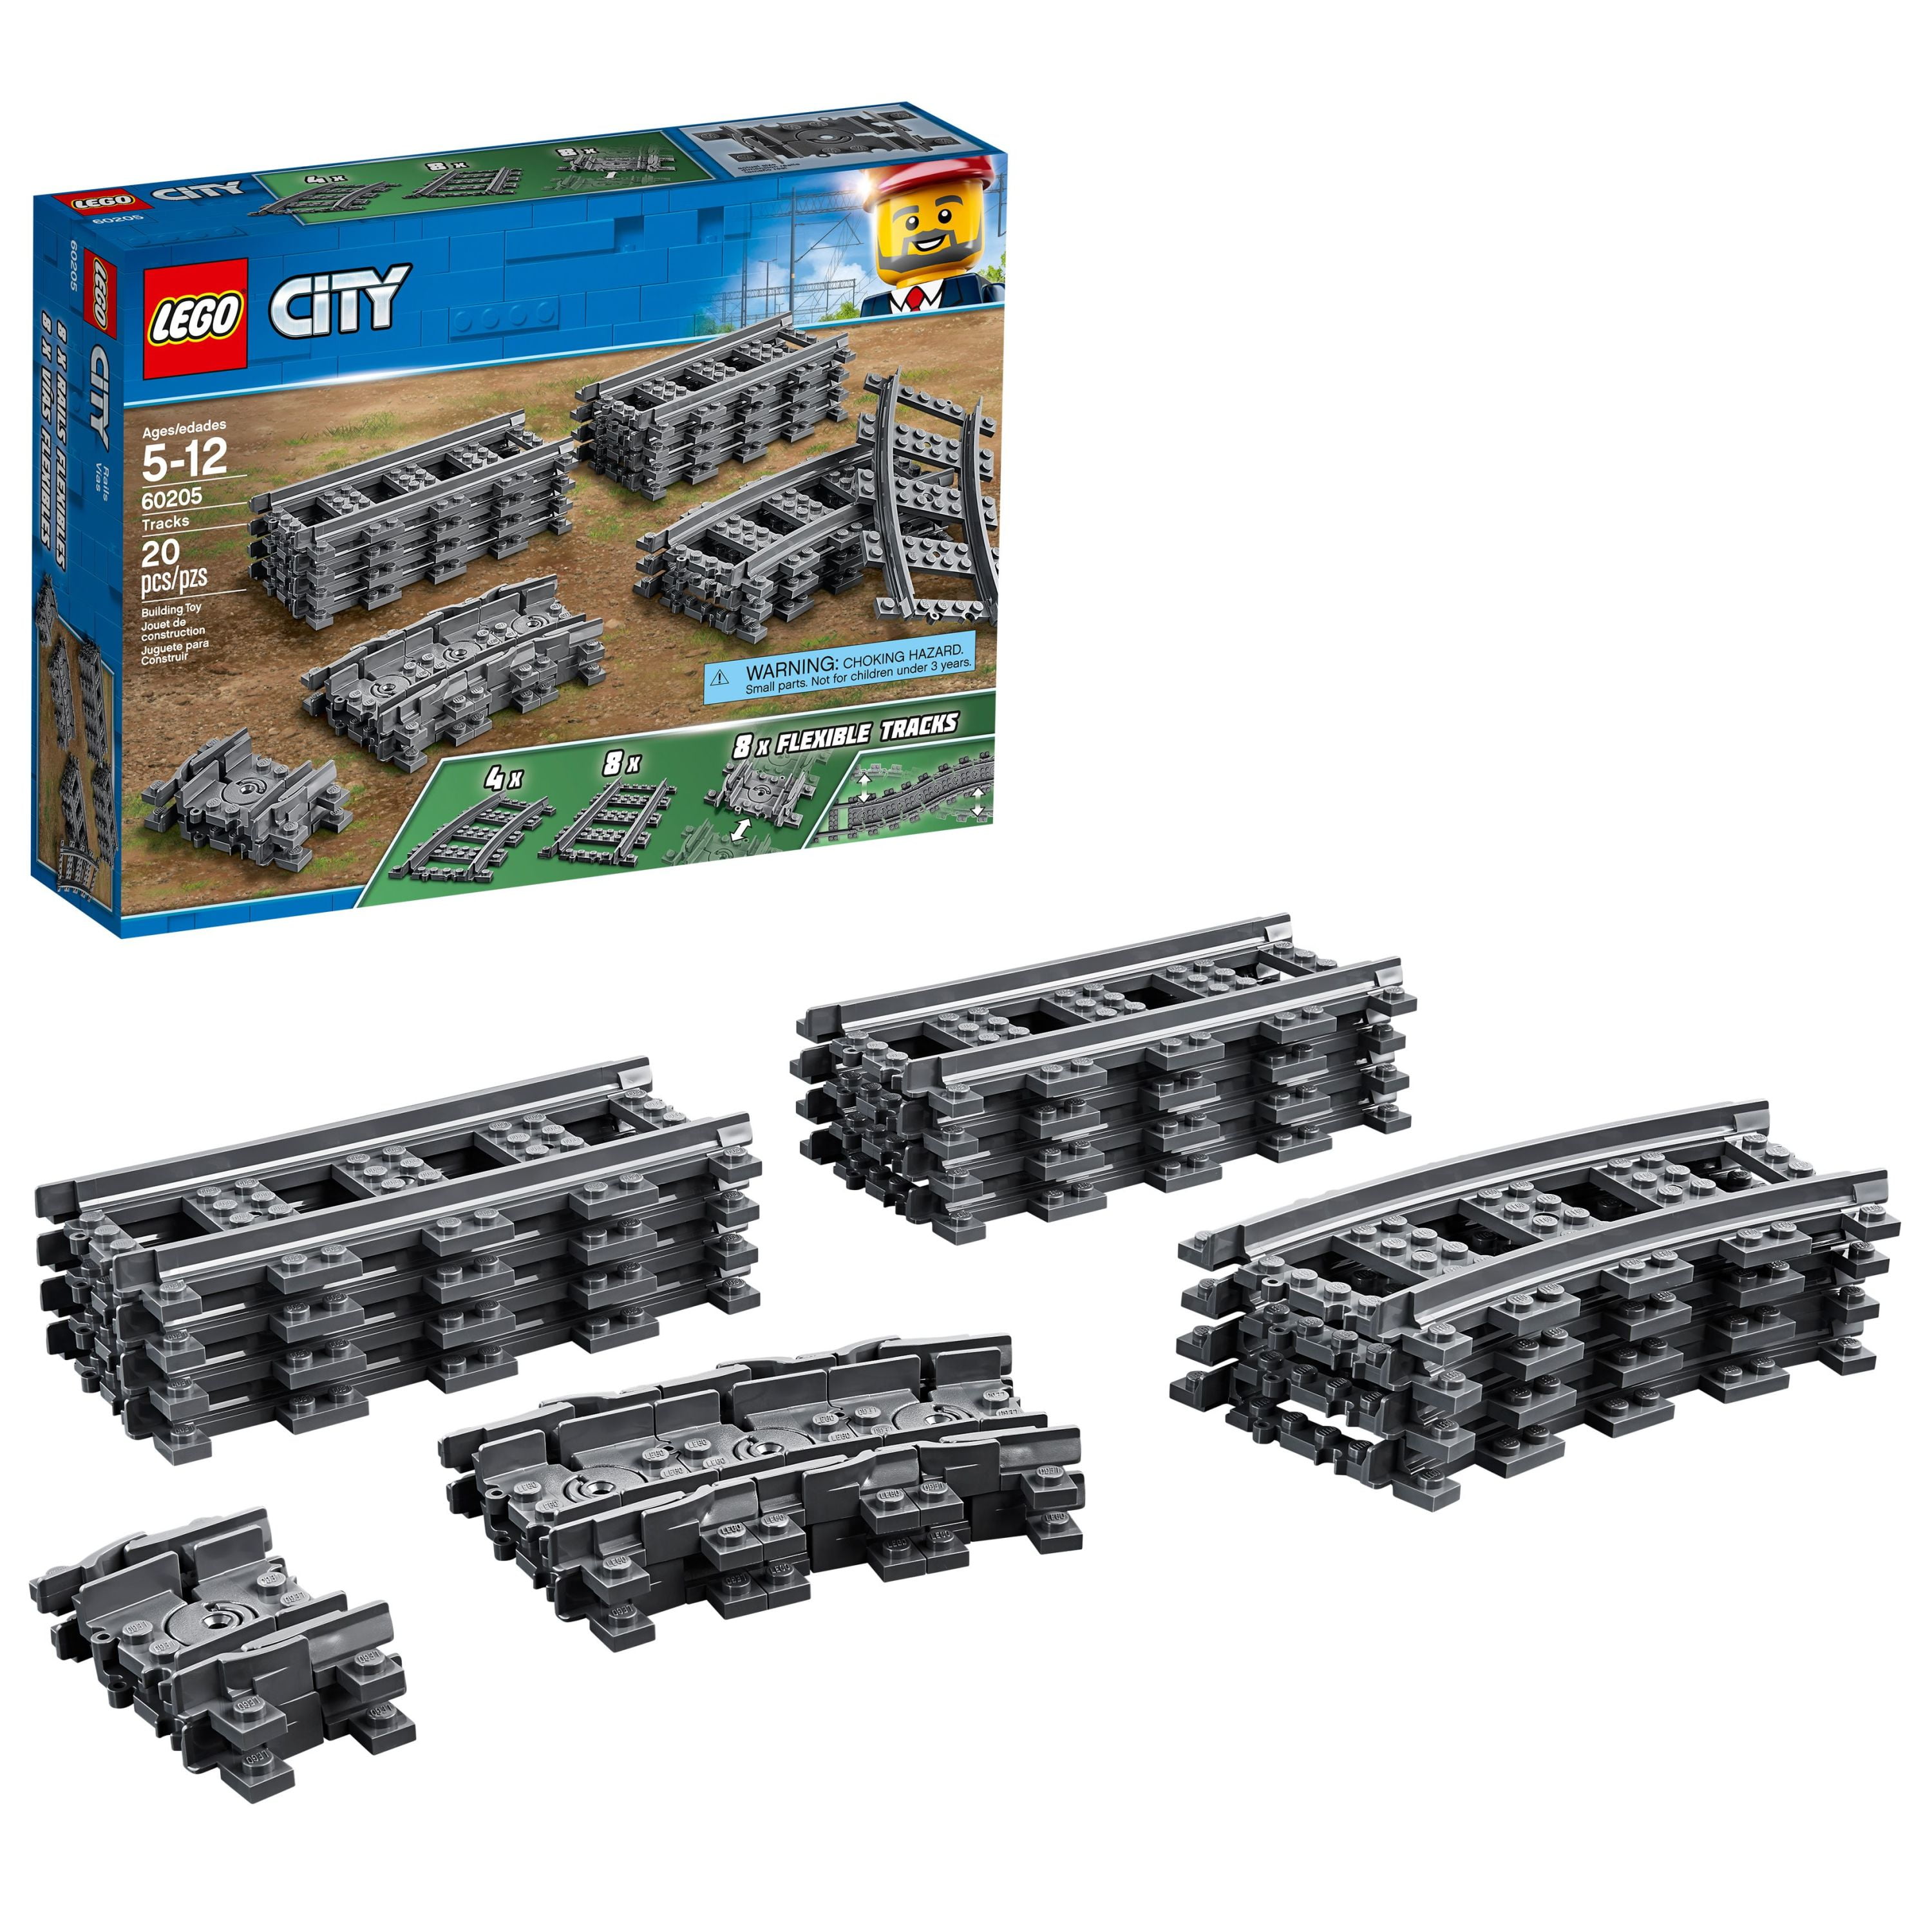 City Tracks 20 Pieces Extension Accessory Set, 60205 Building Track Expansion, Toys for Kids Walmart.com